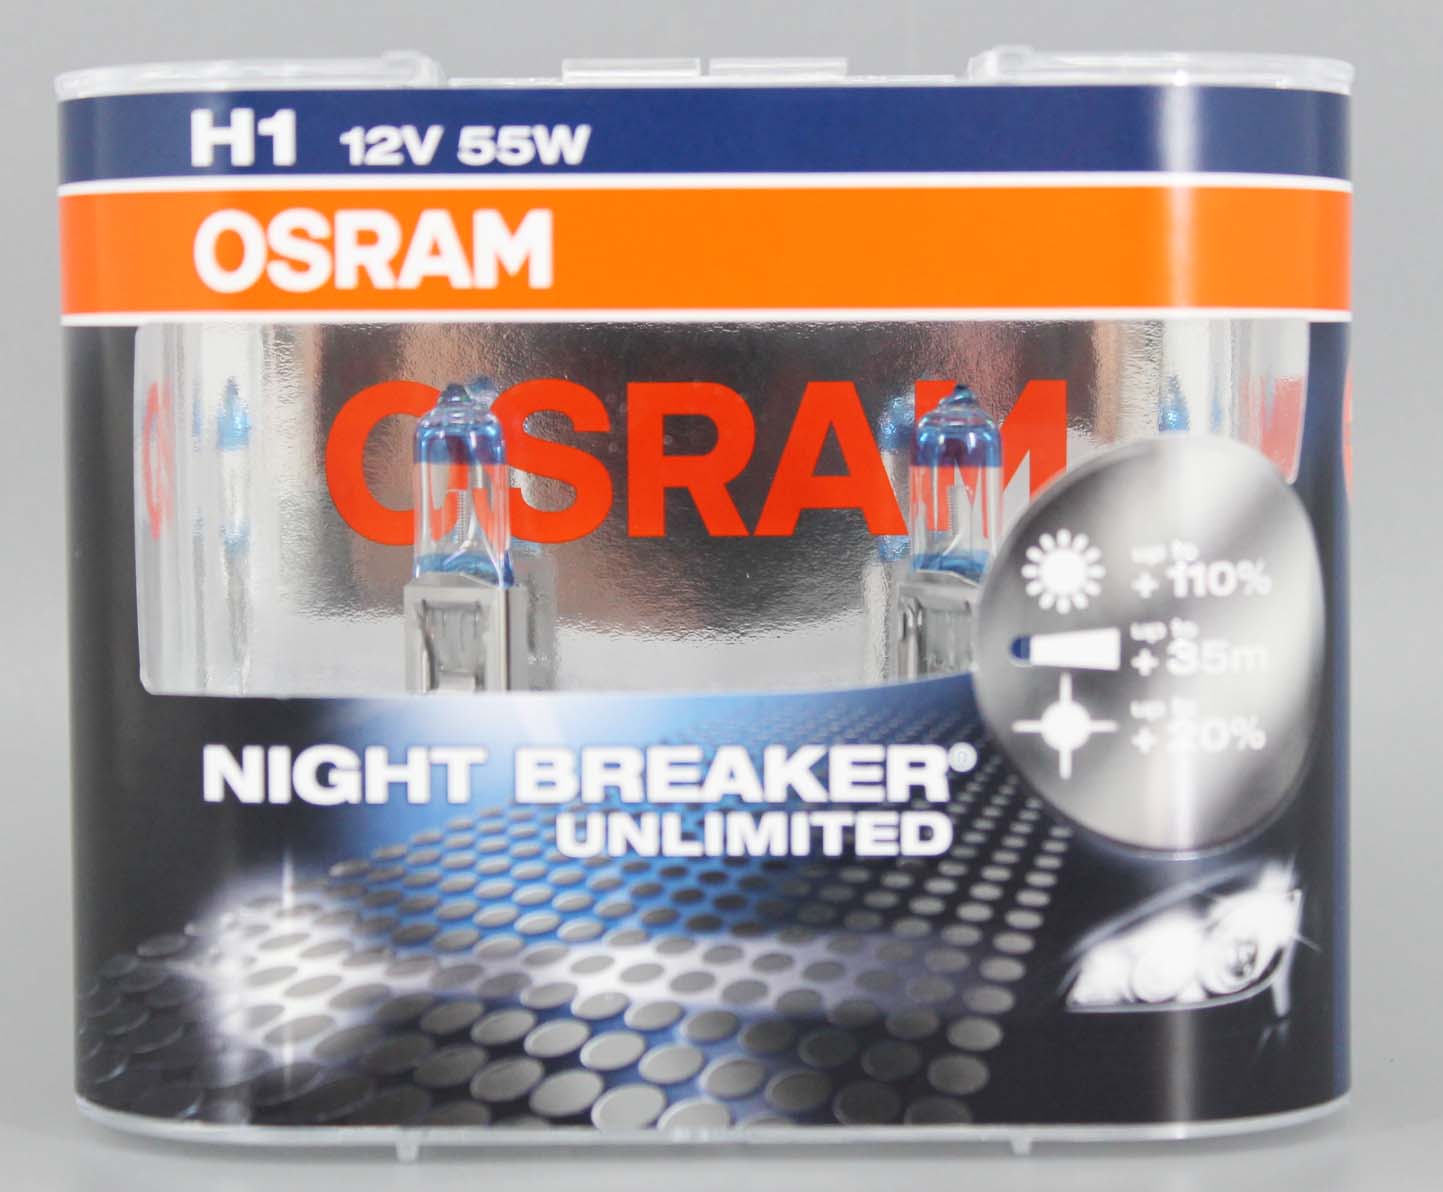 Лампа 12Vx55W H1 +110% OSRAM NIGHT BREAKER UNLIMITED 2шт фотография №1